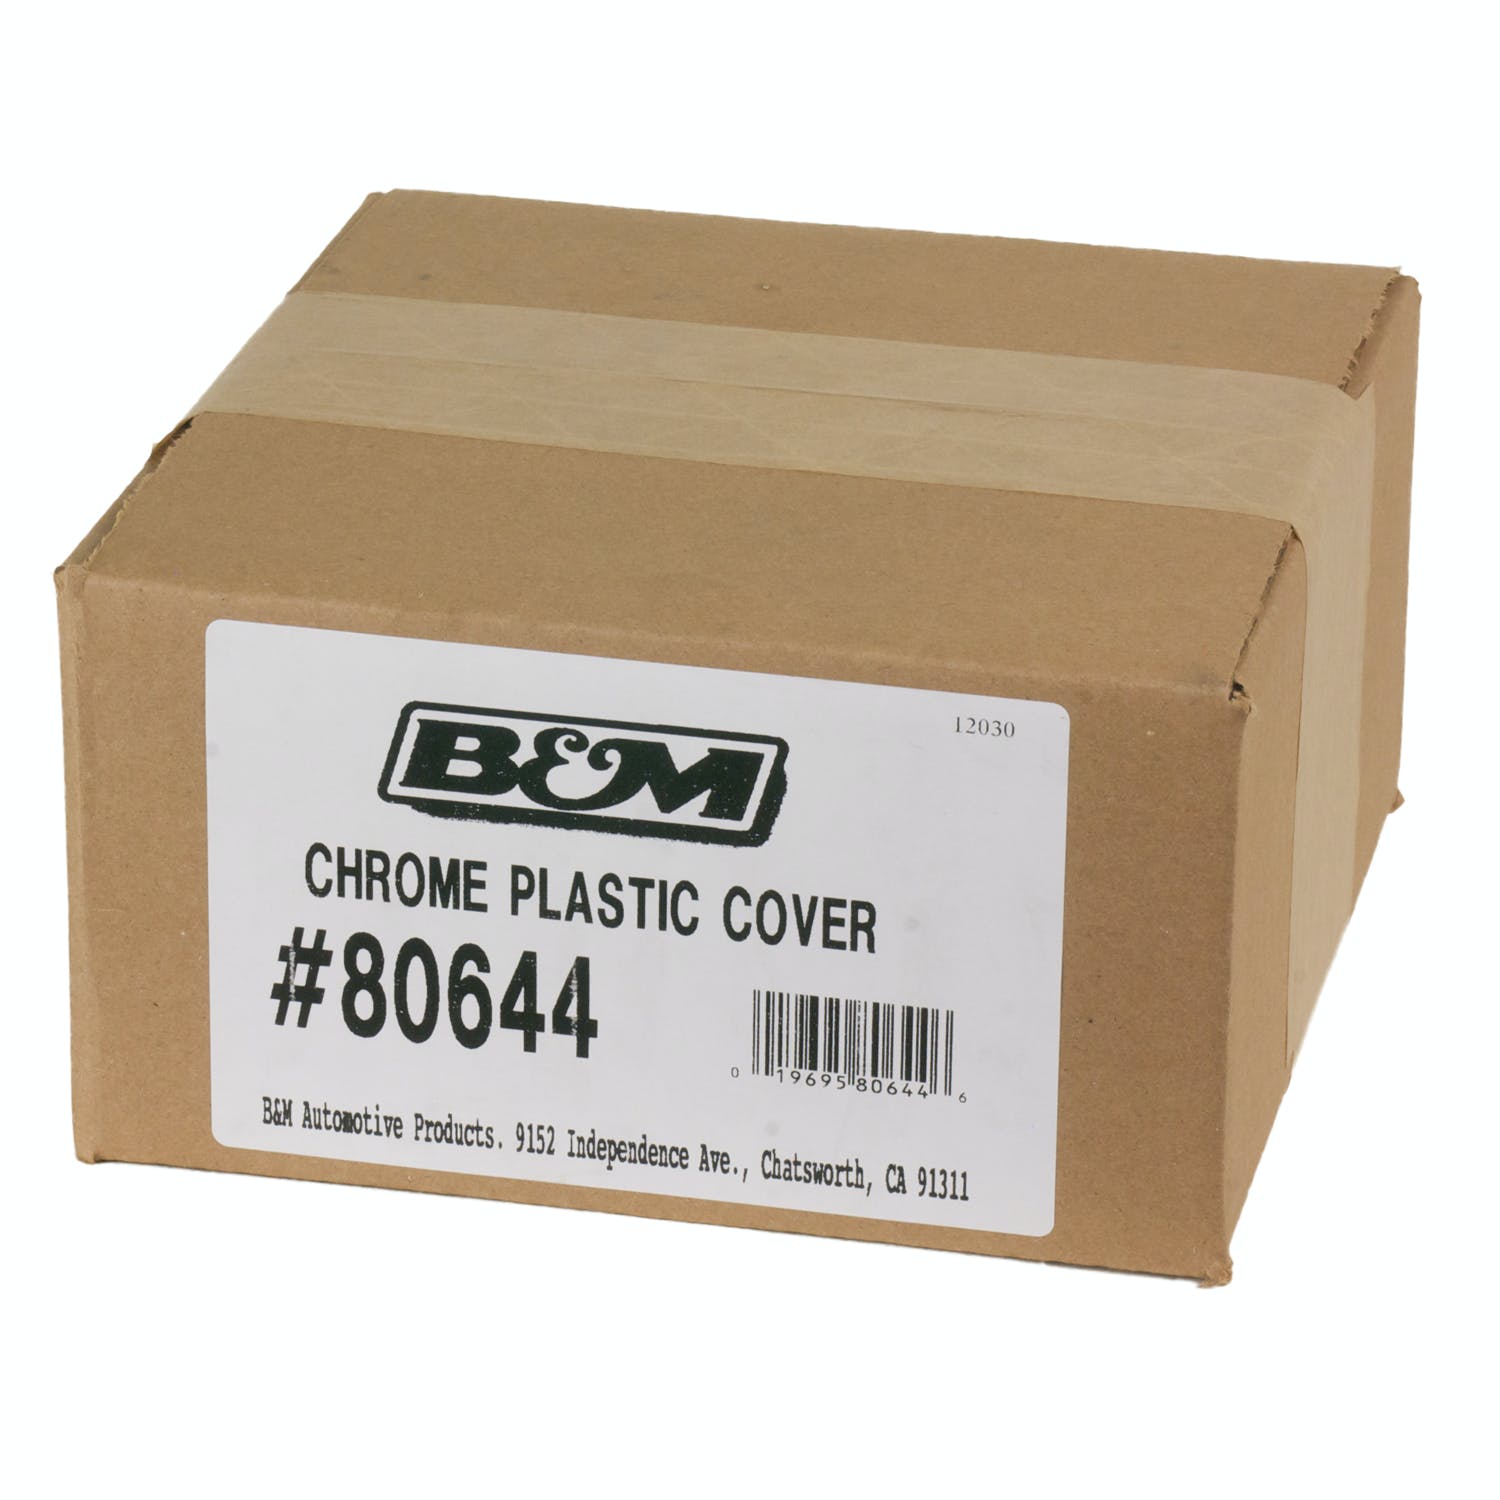 B&M 80644 CHROME PLASTIC COVER